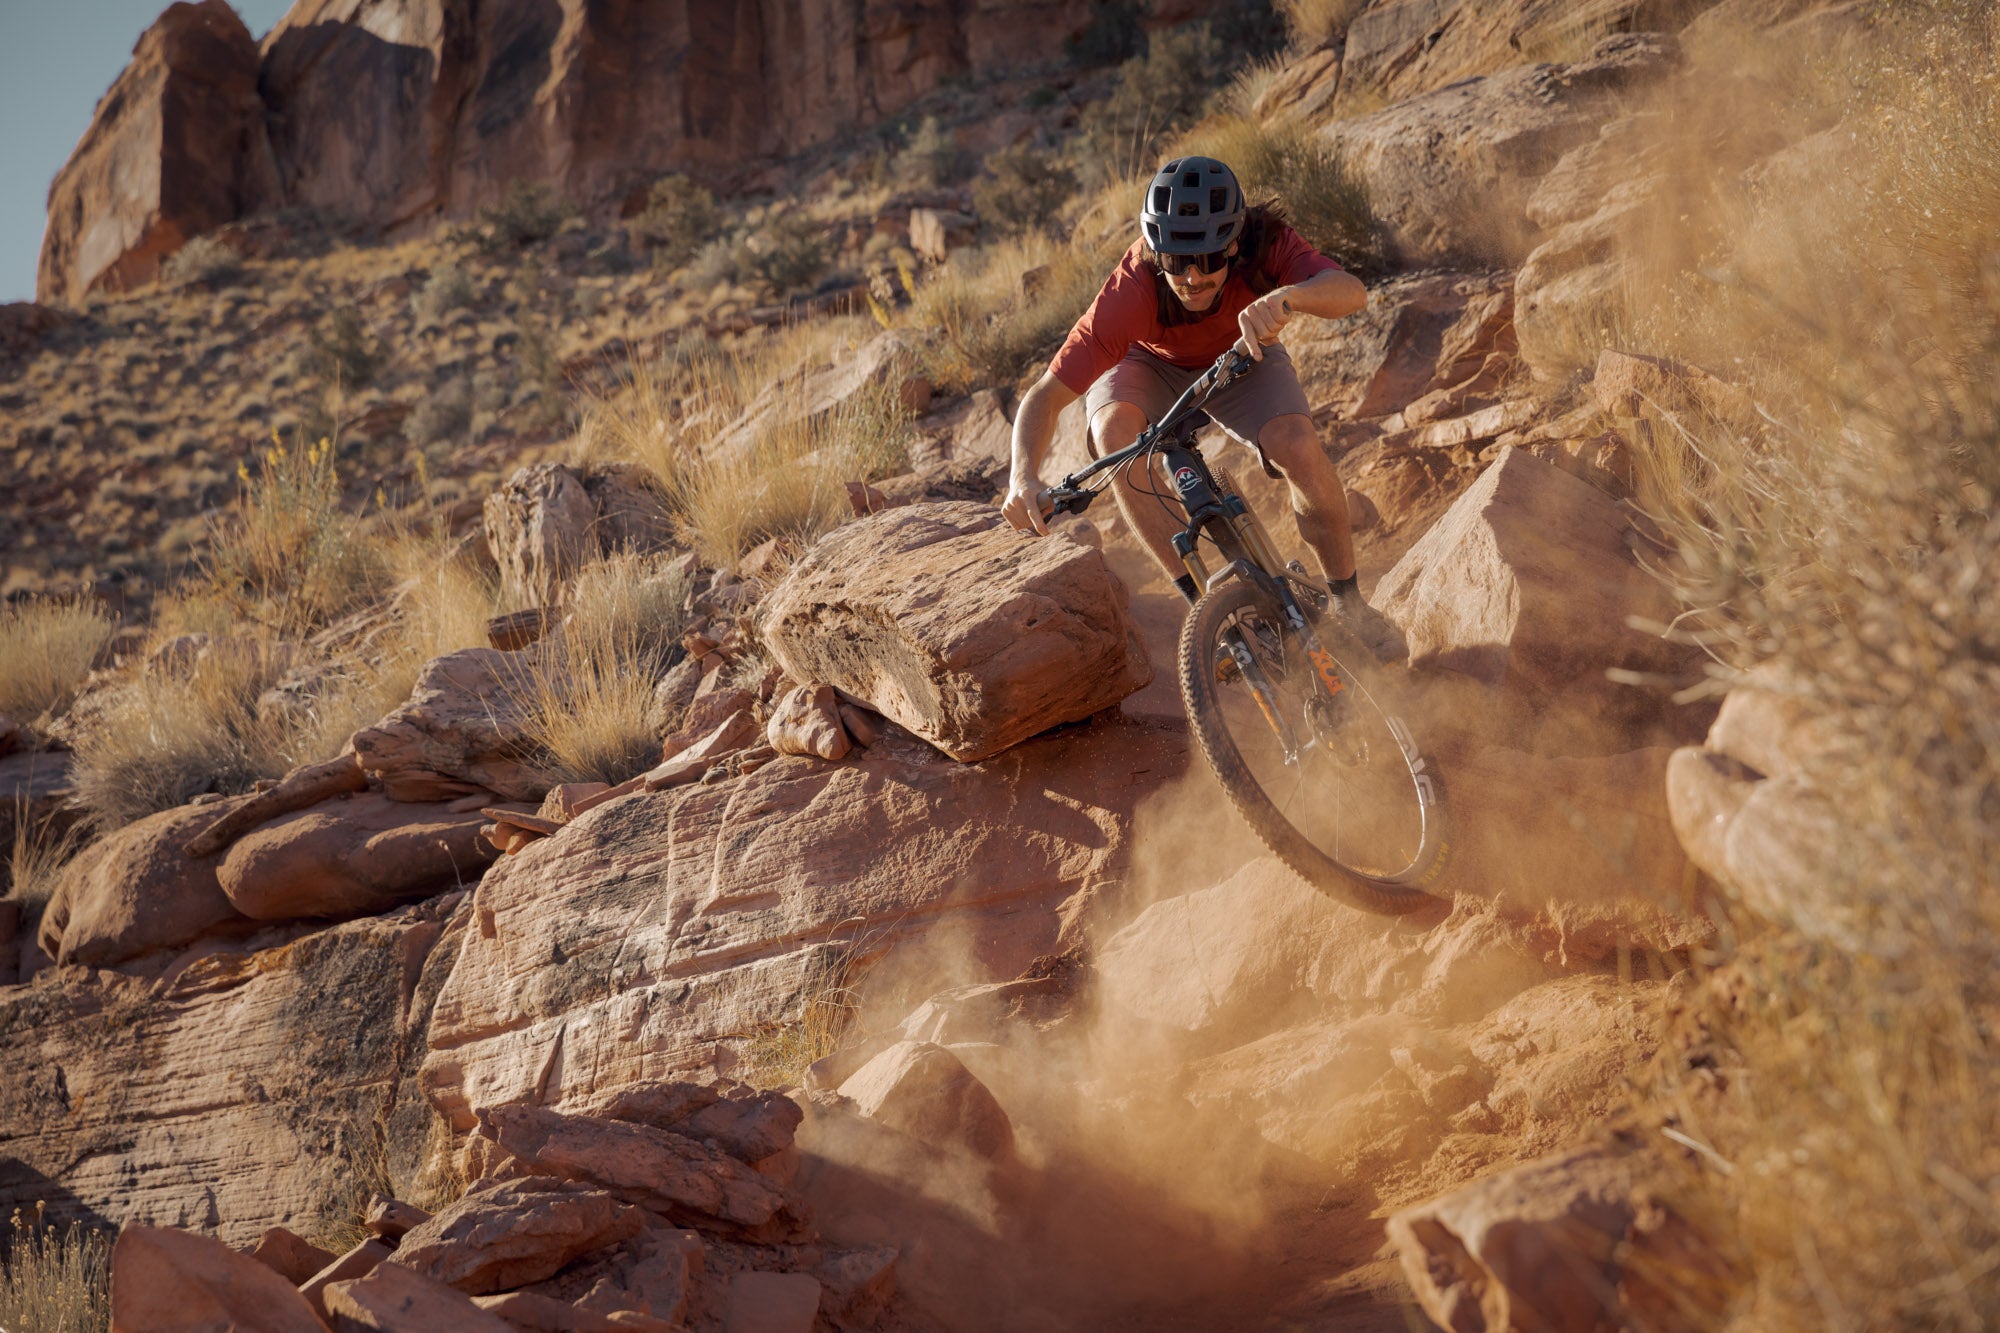 Sam Schultz rides the Element in Moab, Utah.